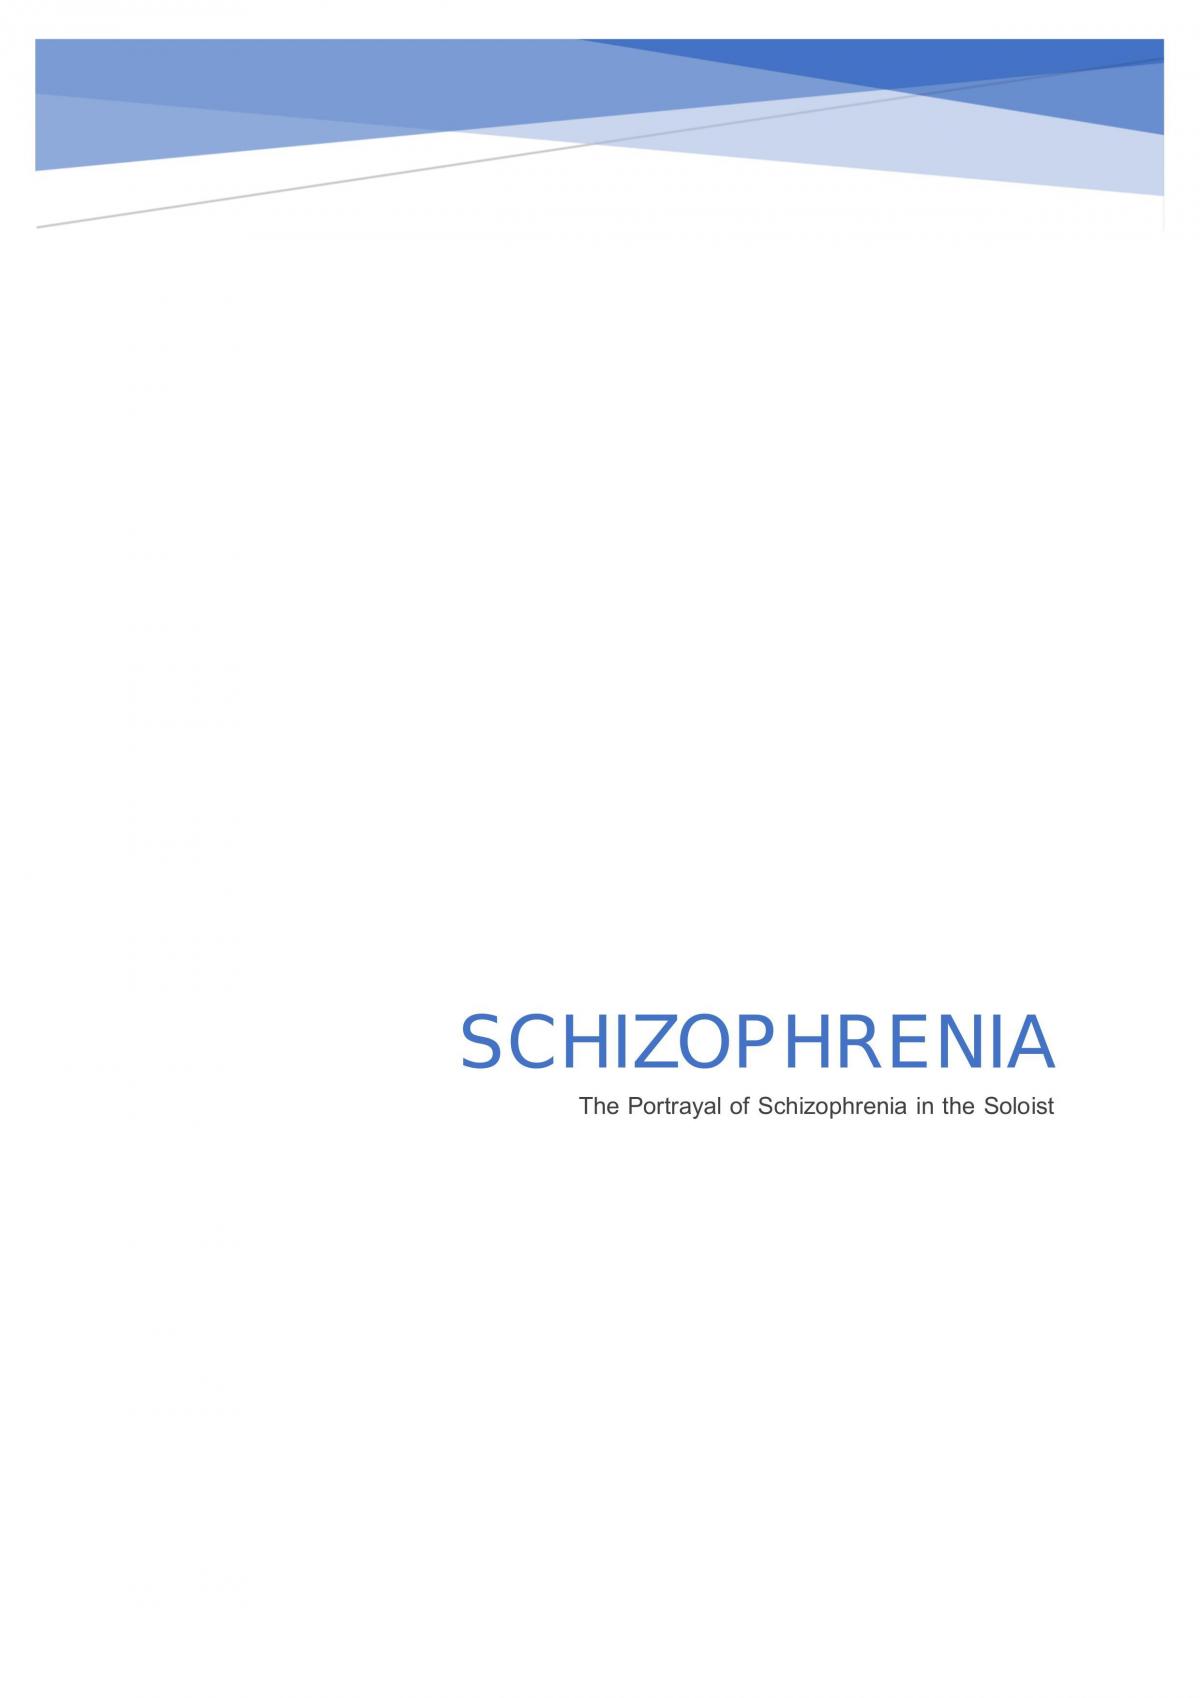 free essay on schizophrenia